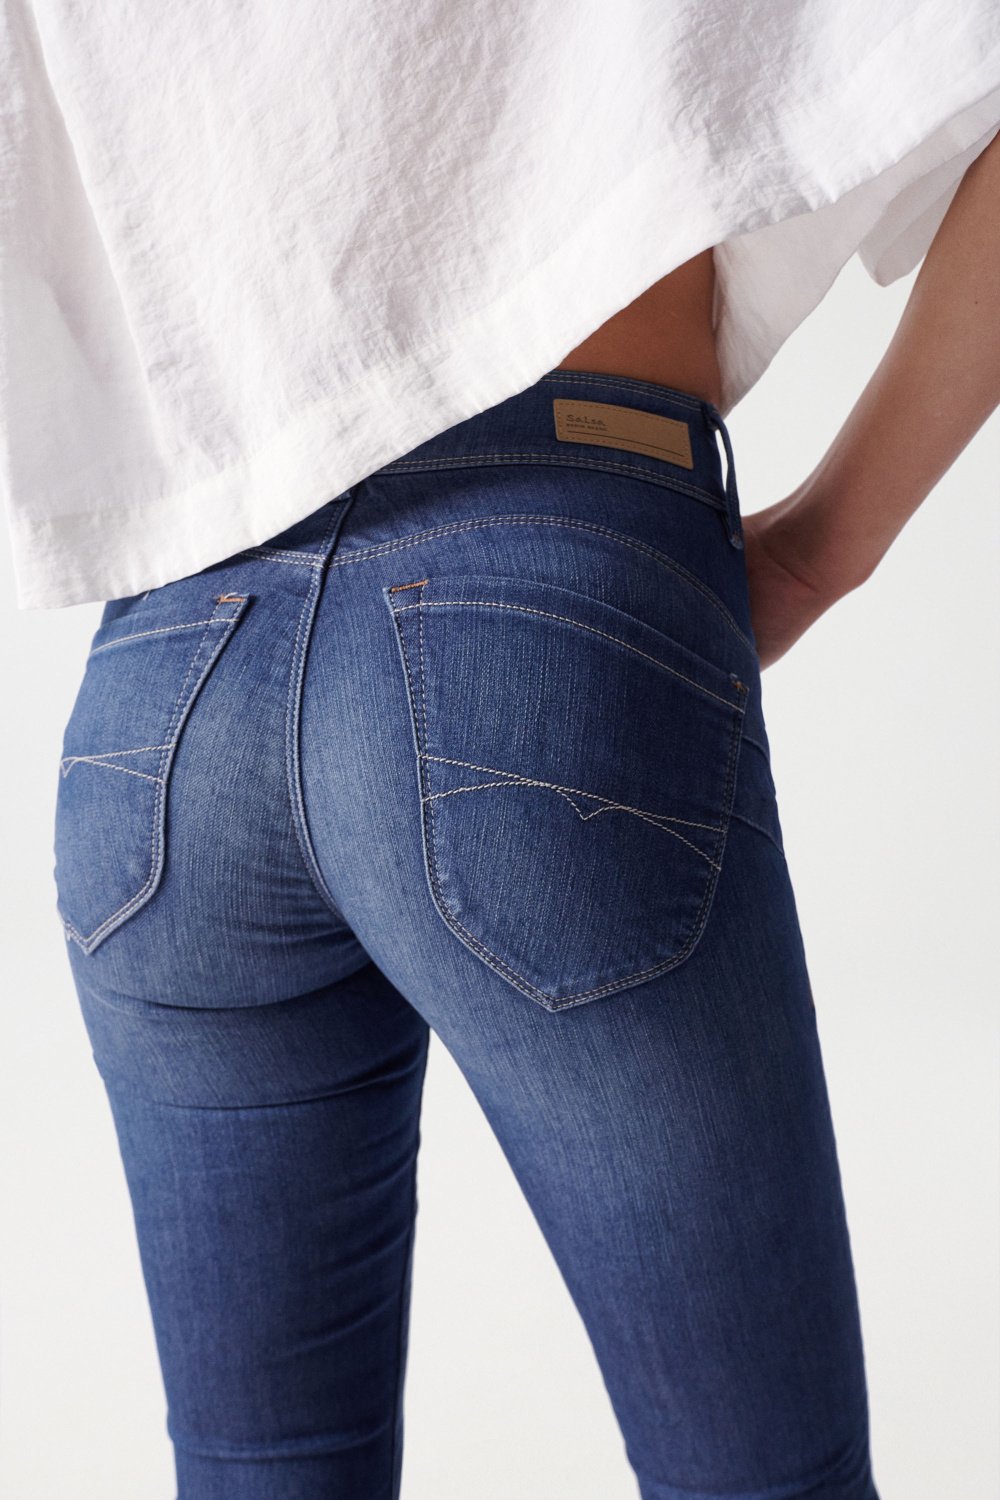 Secret Skinny Push-In in Medium Wash Jeans Salsa Jeans   